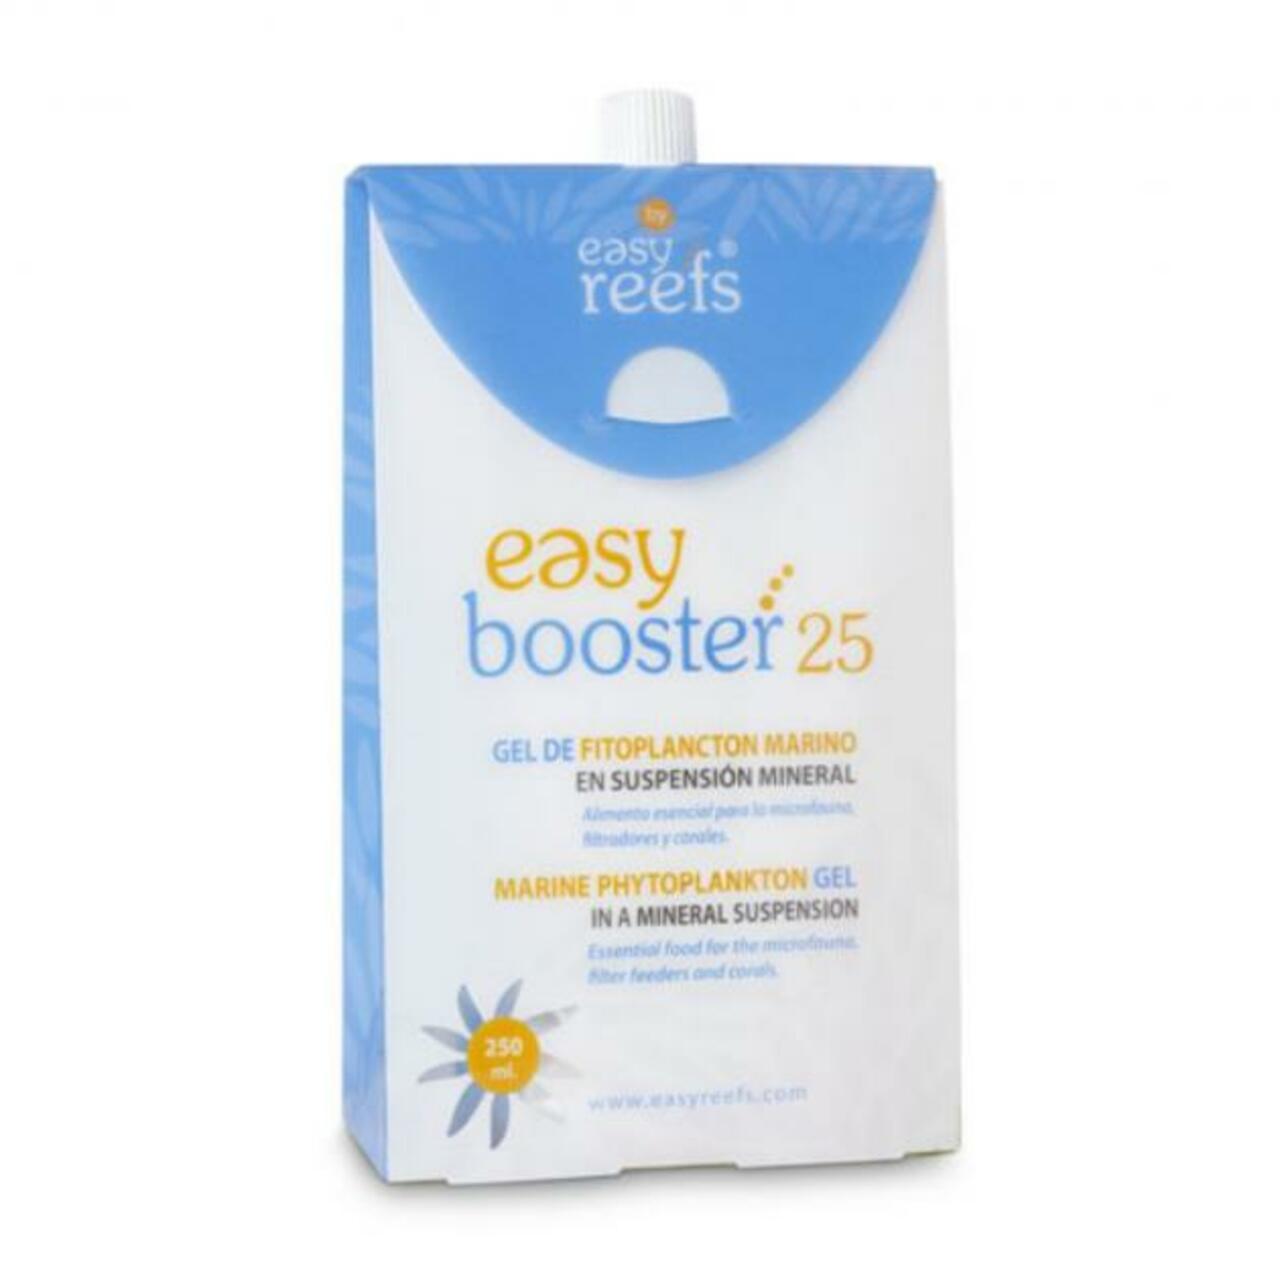 Easy Reefs booster 25